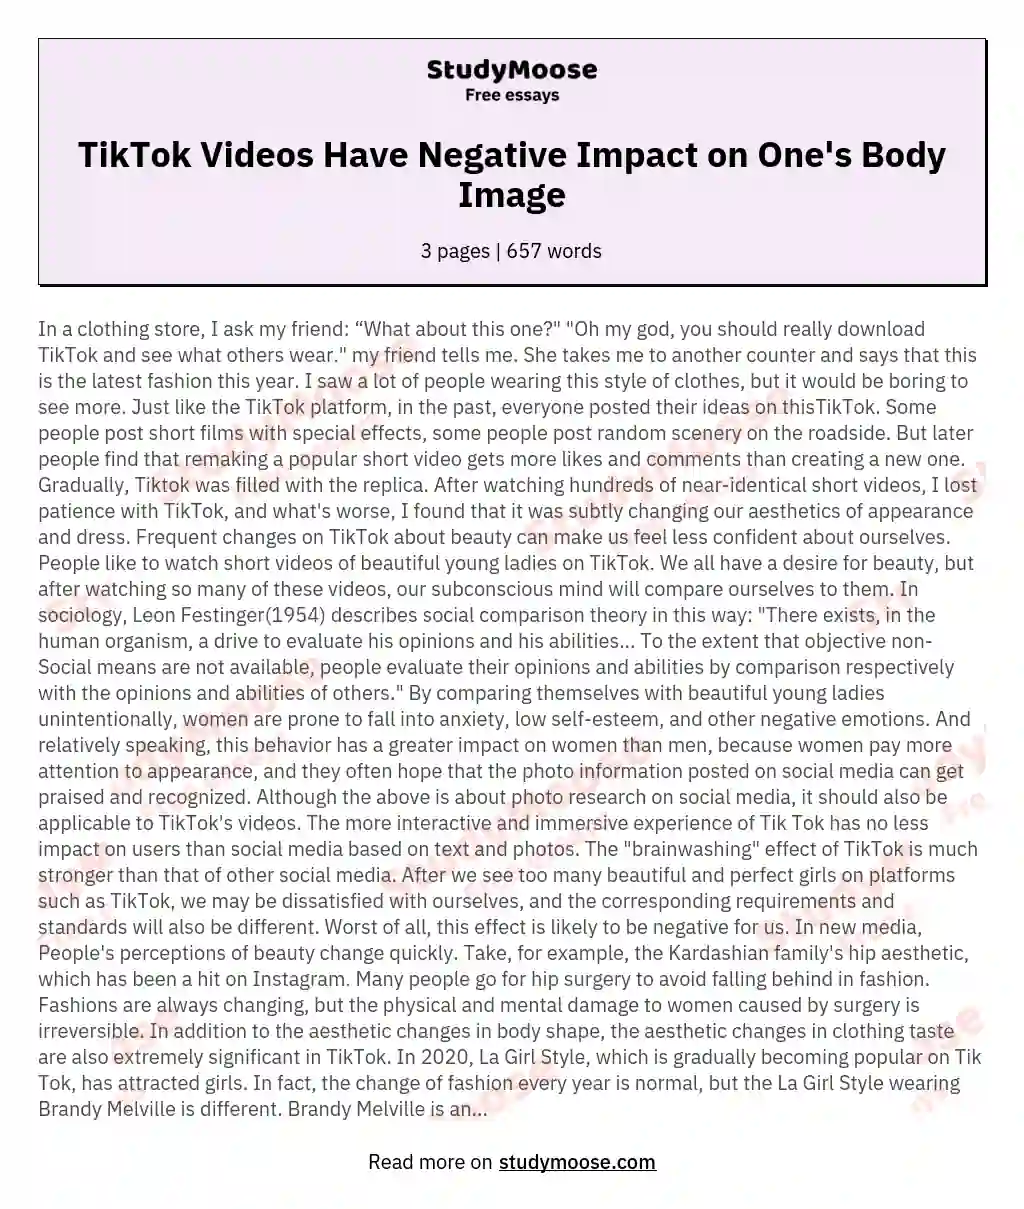 TikTok Videos Have Negative Impact on One's Body Image essay